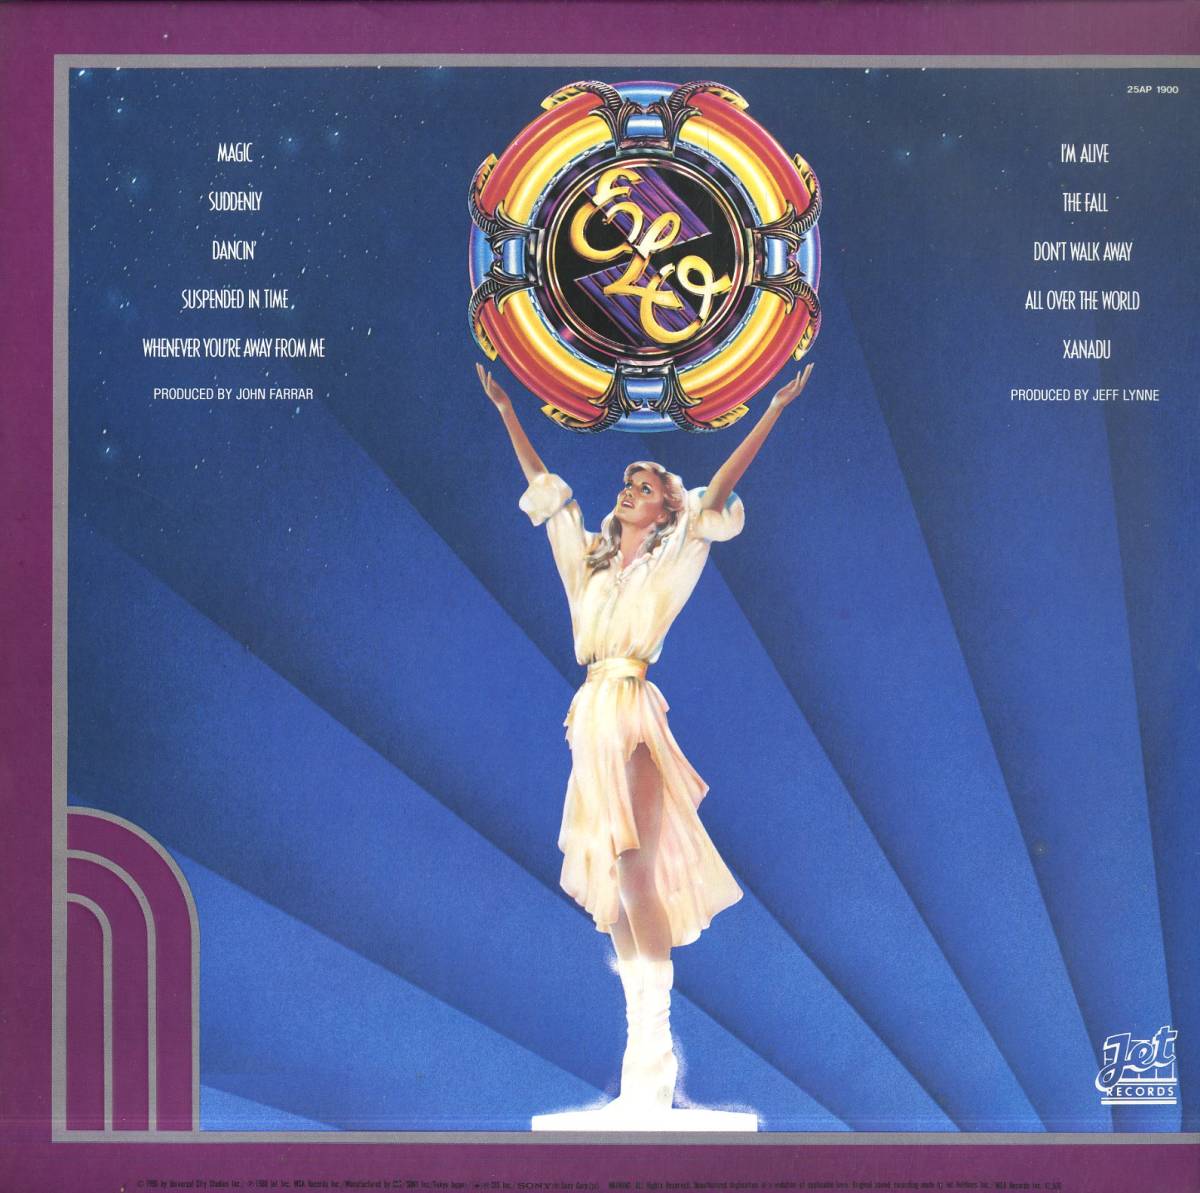 A00561964/LP/ELO / オリビア・ニュートン・ジョン「ザナドゥ Xanadu OST (1980年・25AP-1900・ディスコ・DISCO・シンセポップ)」_画像2